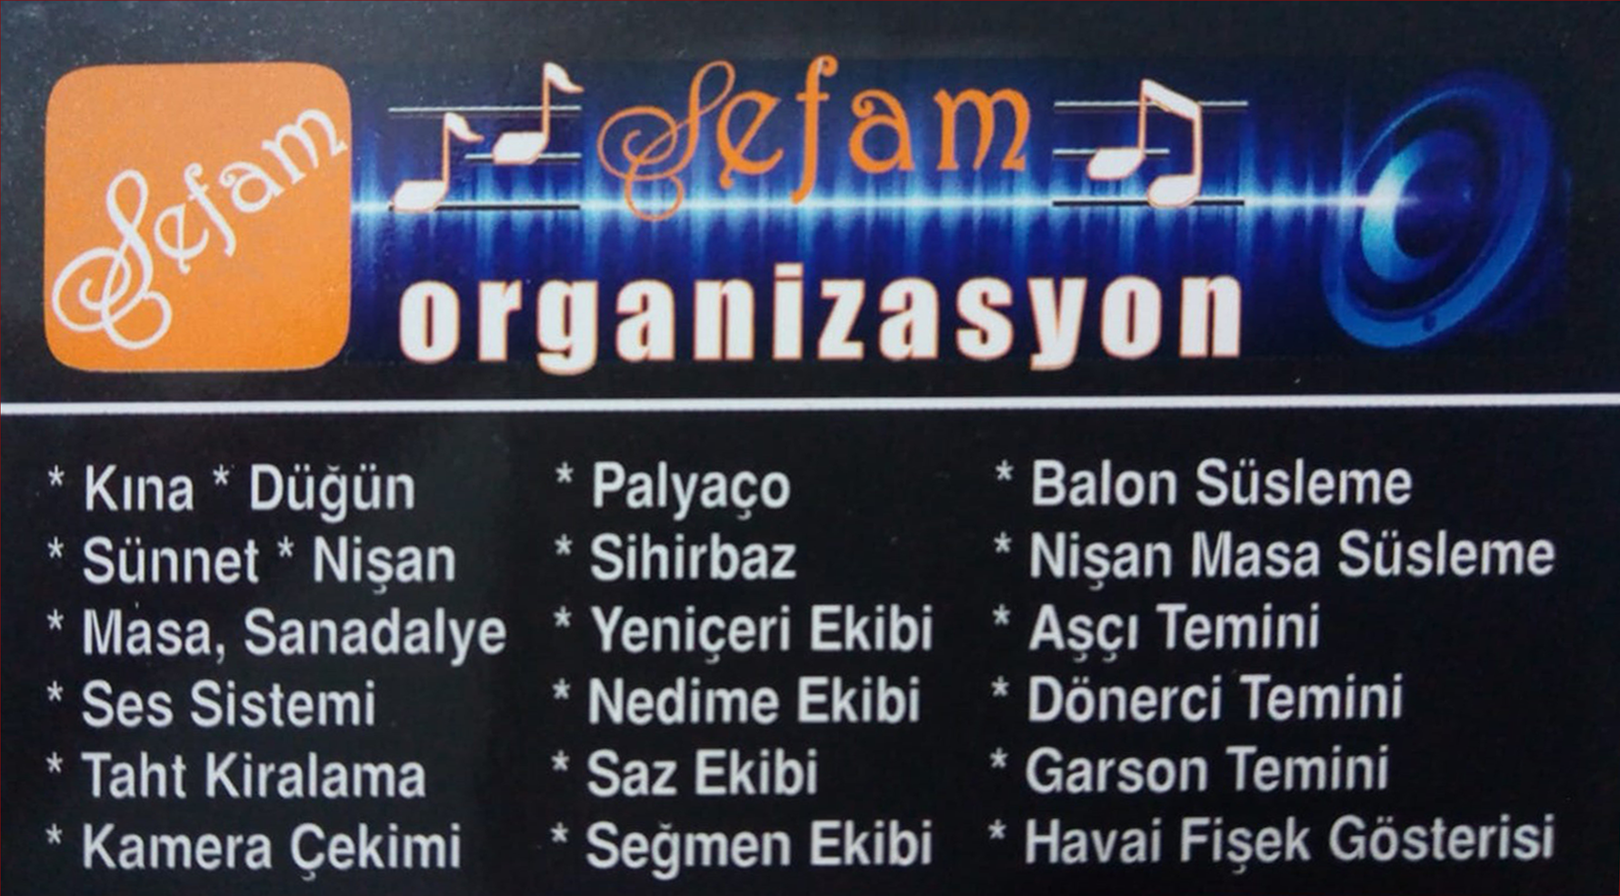 Eryaman Sefam Organizasyon Ankara 0536 474 94 46 - 0552 474 94 46